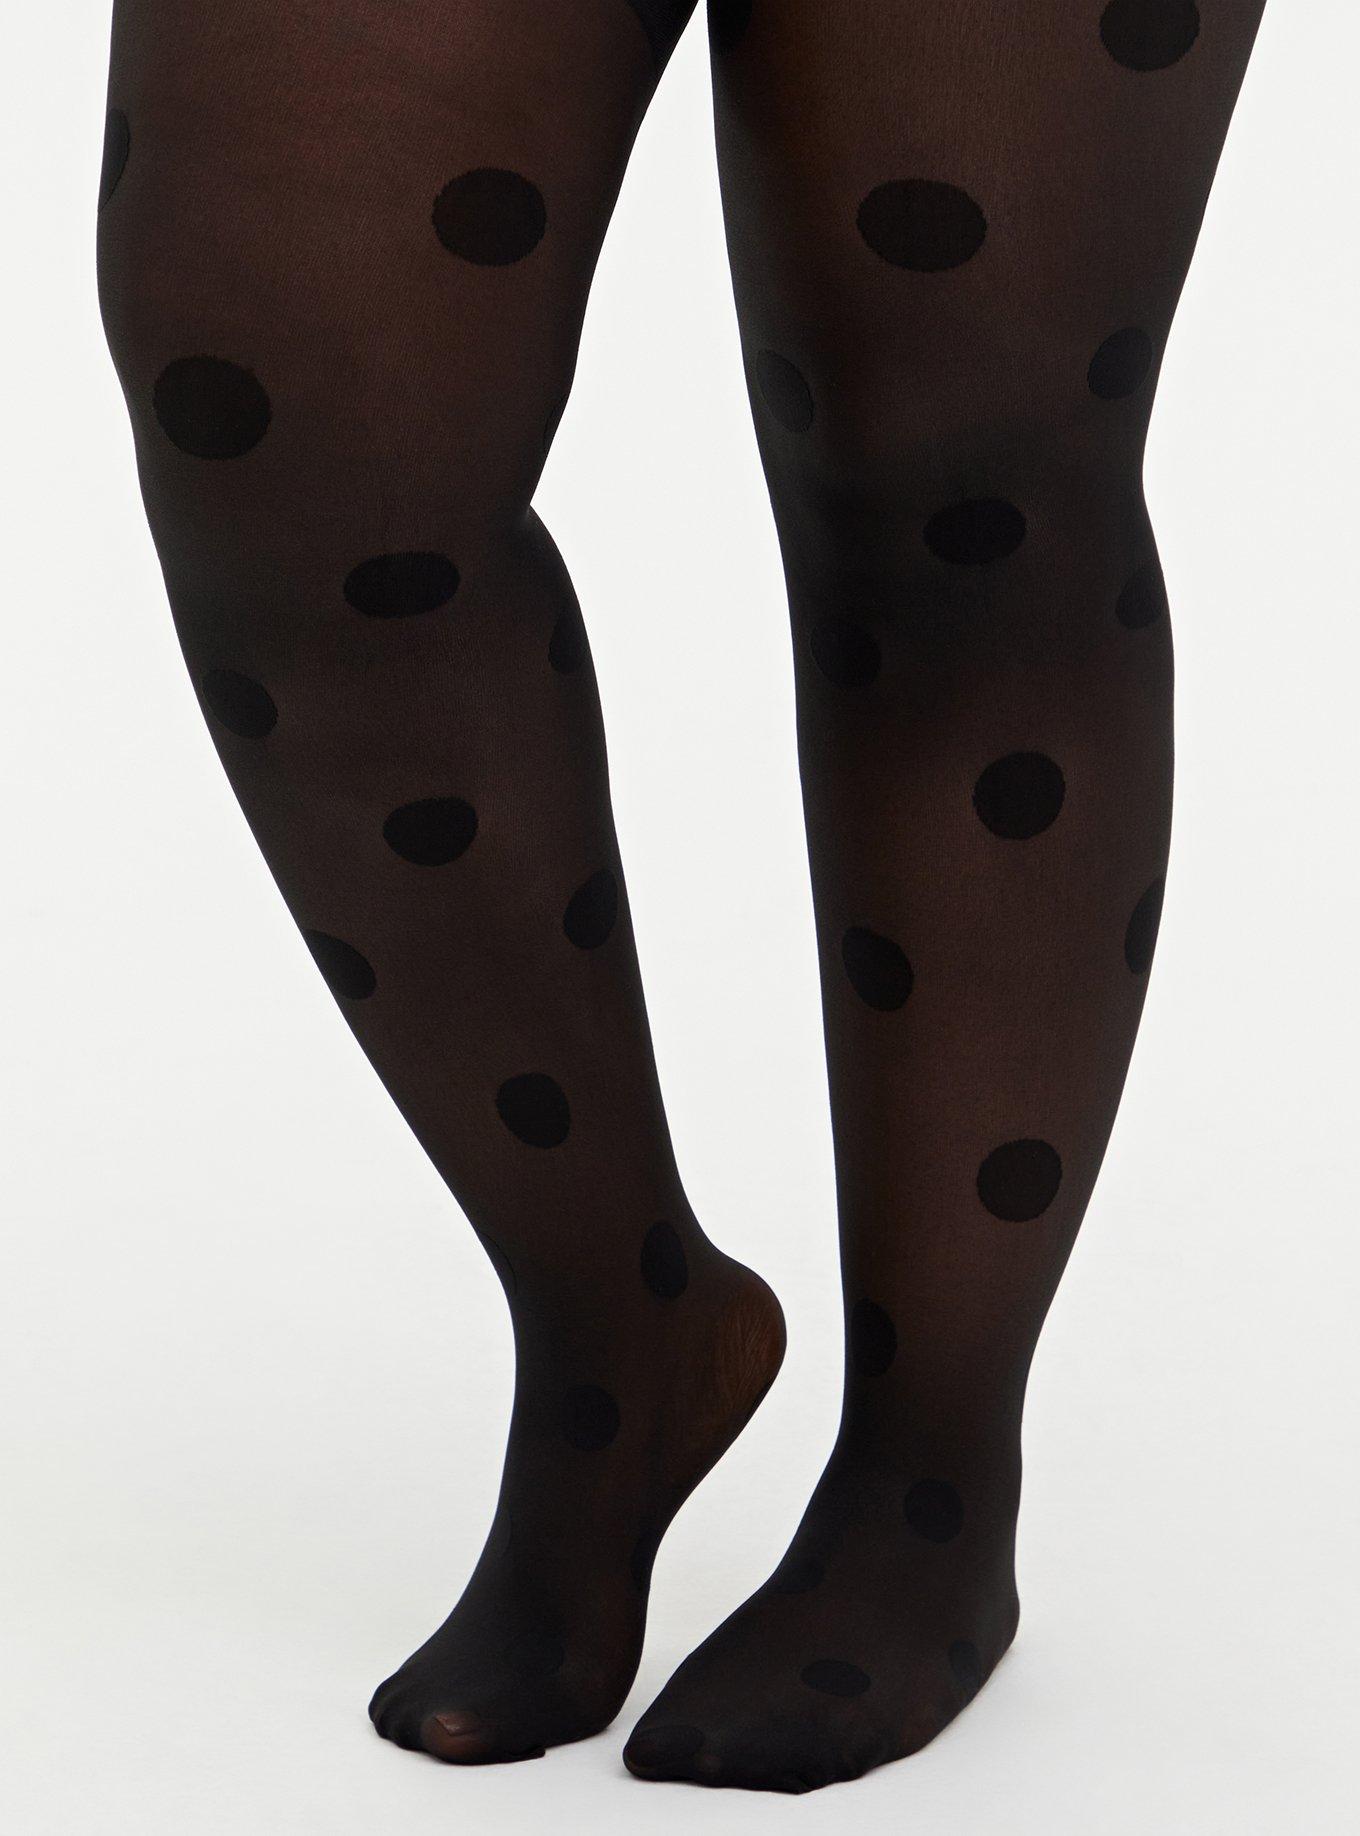 Black Polka Dot Patterned Tights, Women's Black Tights With White Polka Dot  Print, Black Pantyhose, Black Polka Dot Nylons, -  Canada